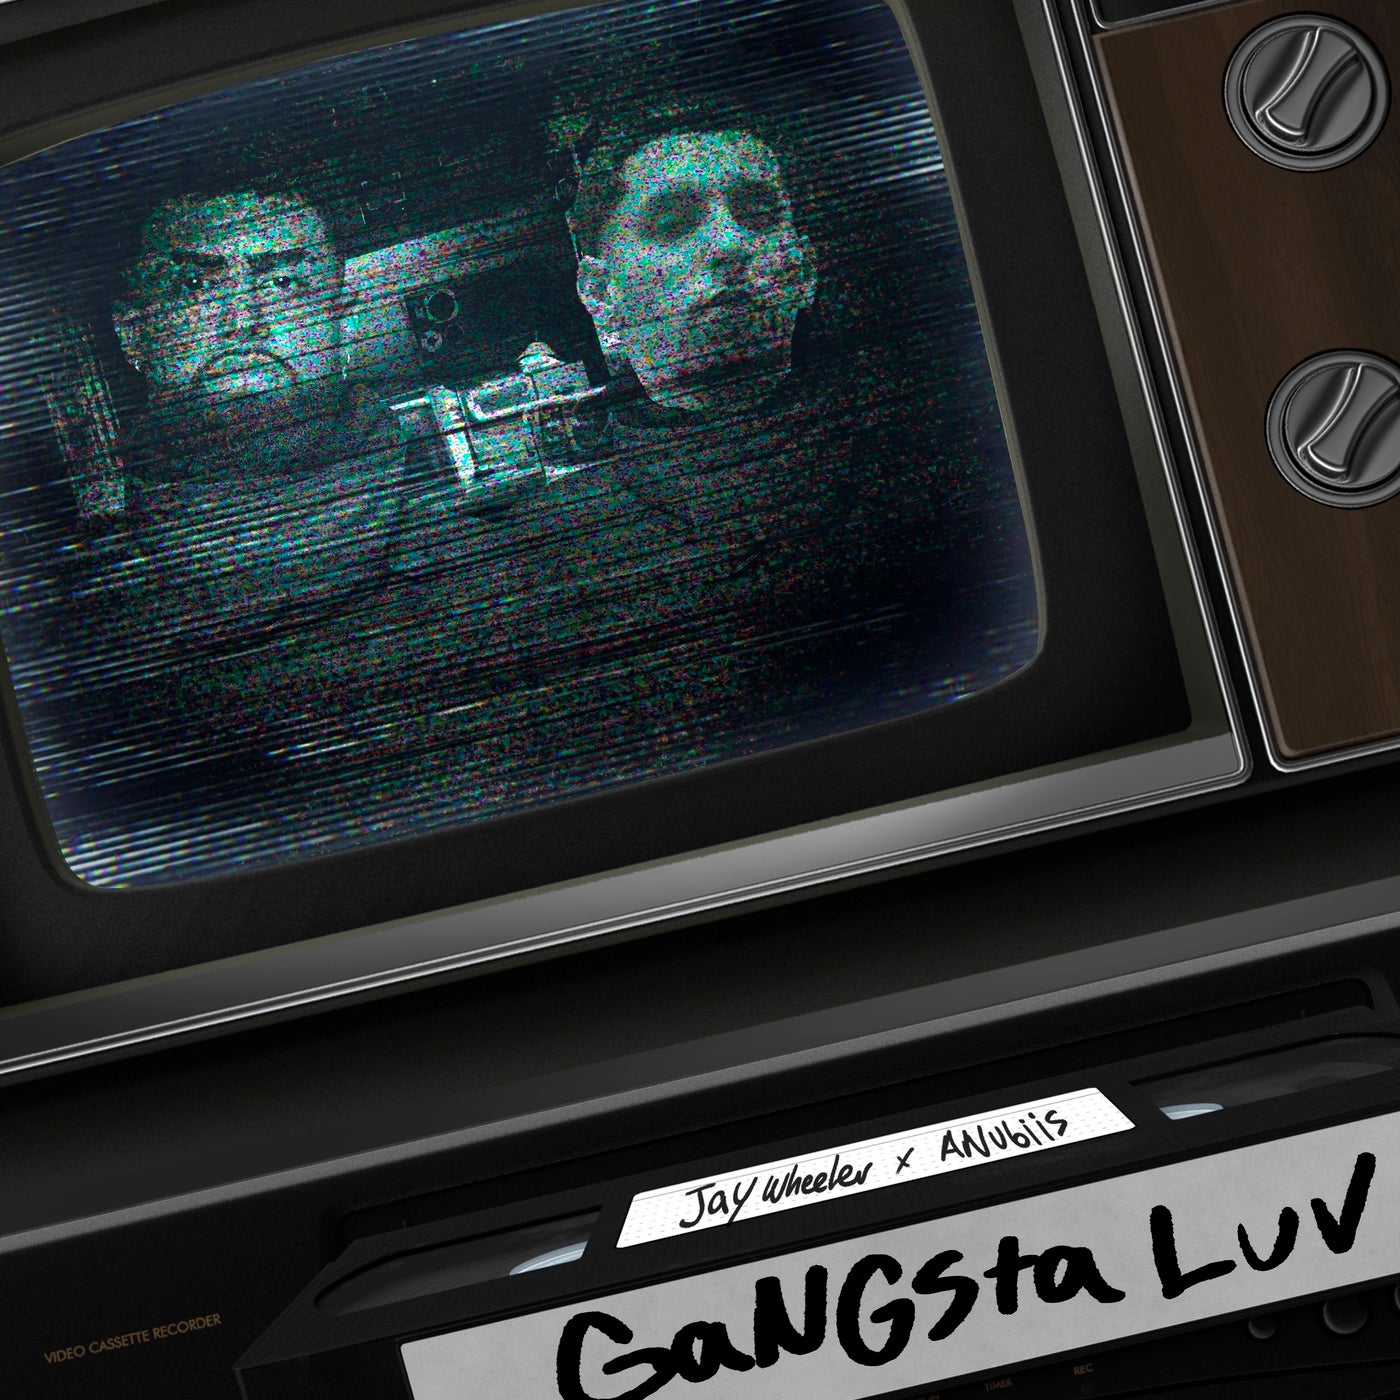 GANGSTA LUV by Jay Wheeler and Anubiis on Beatsource